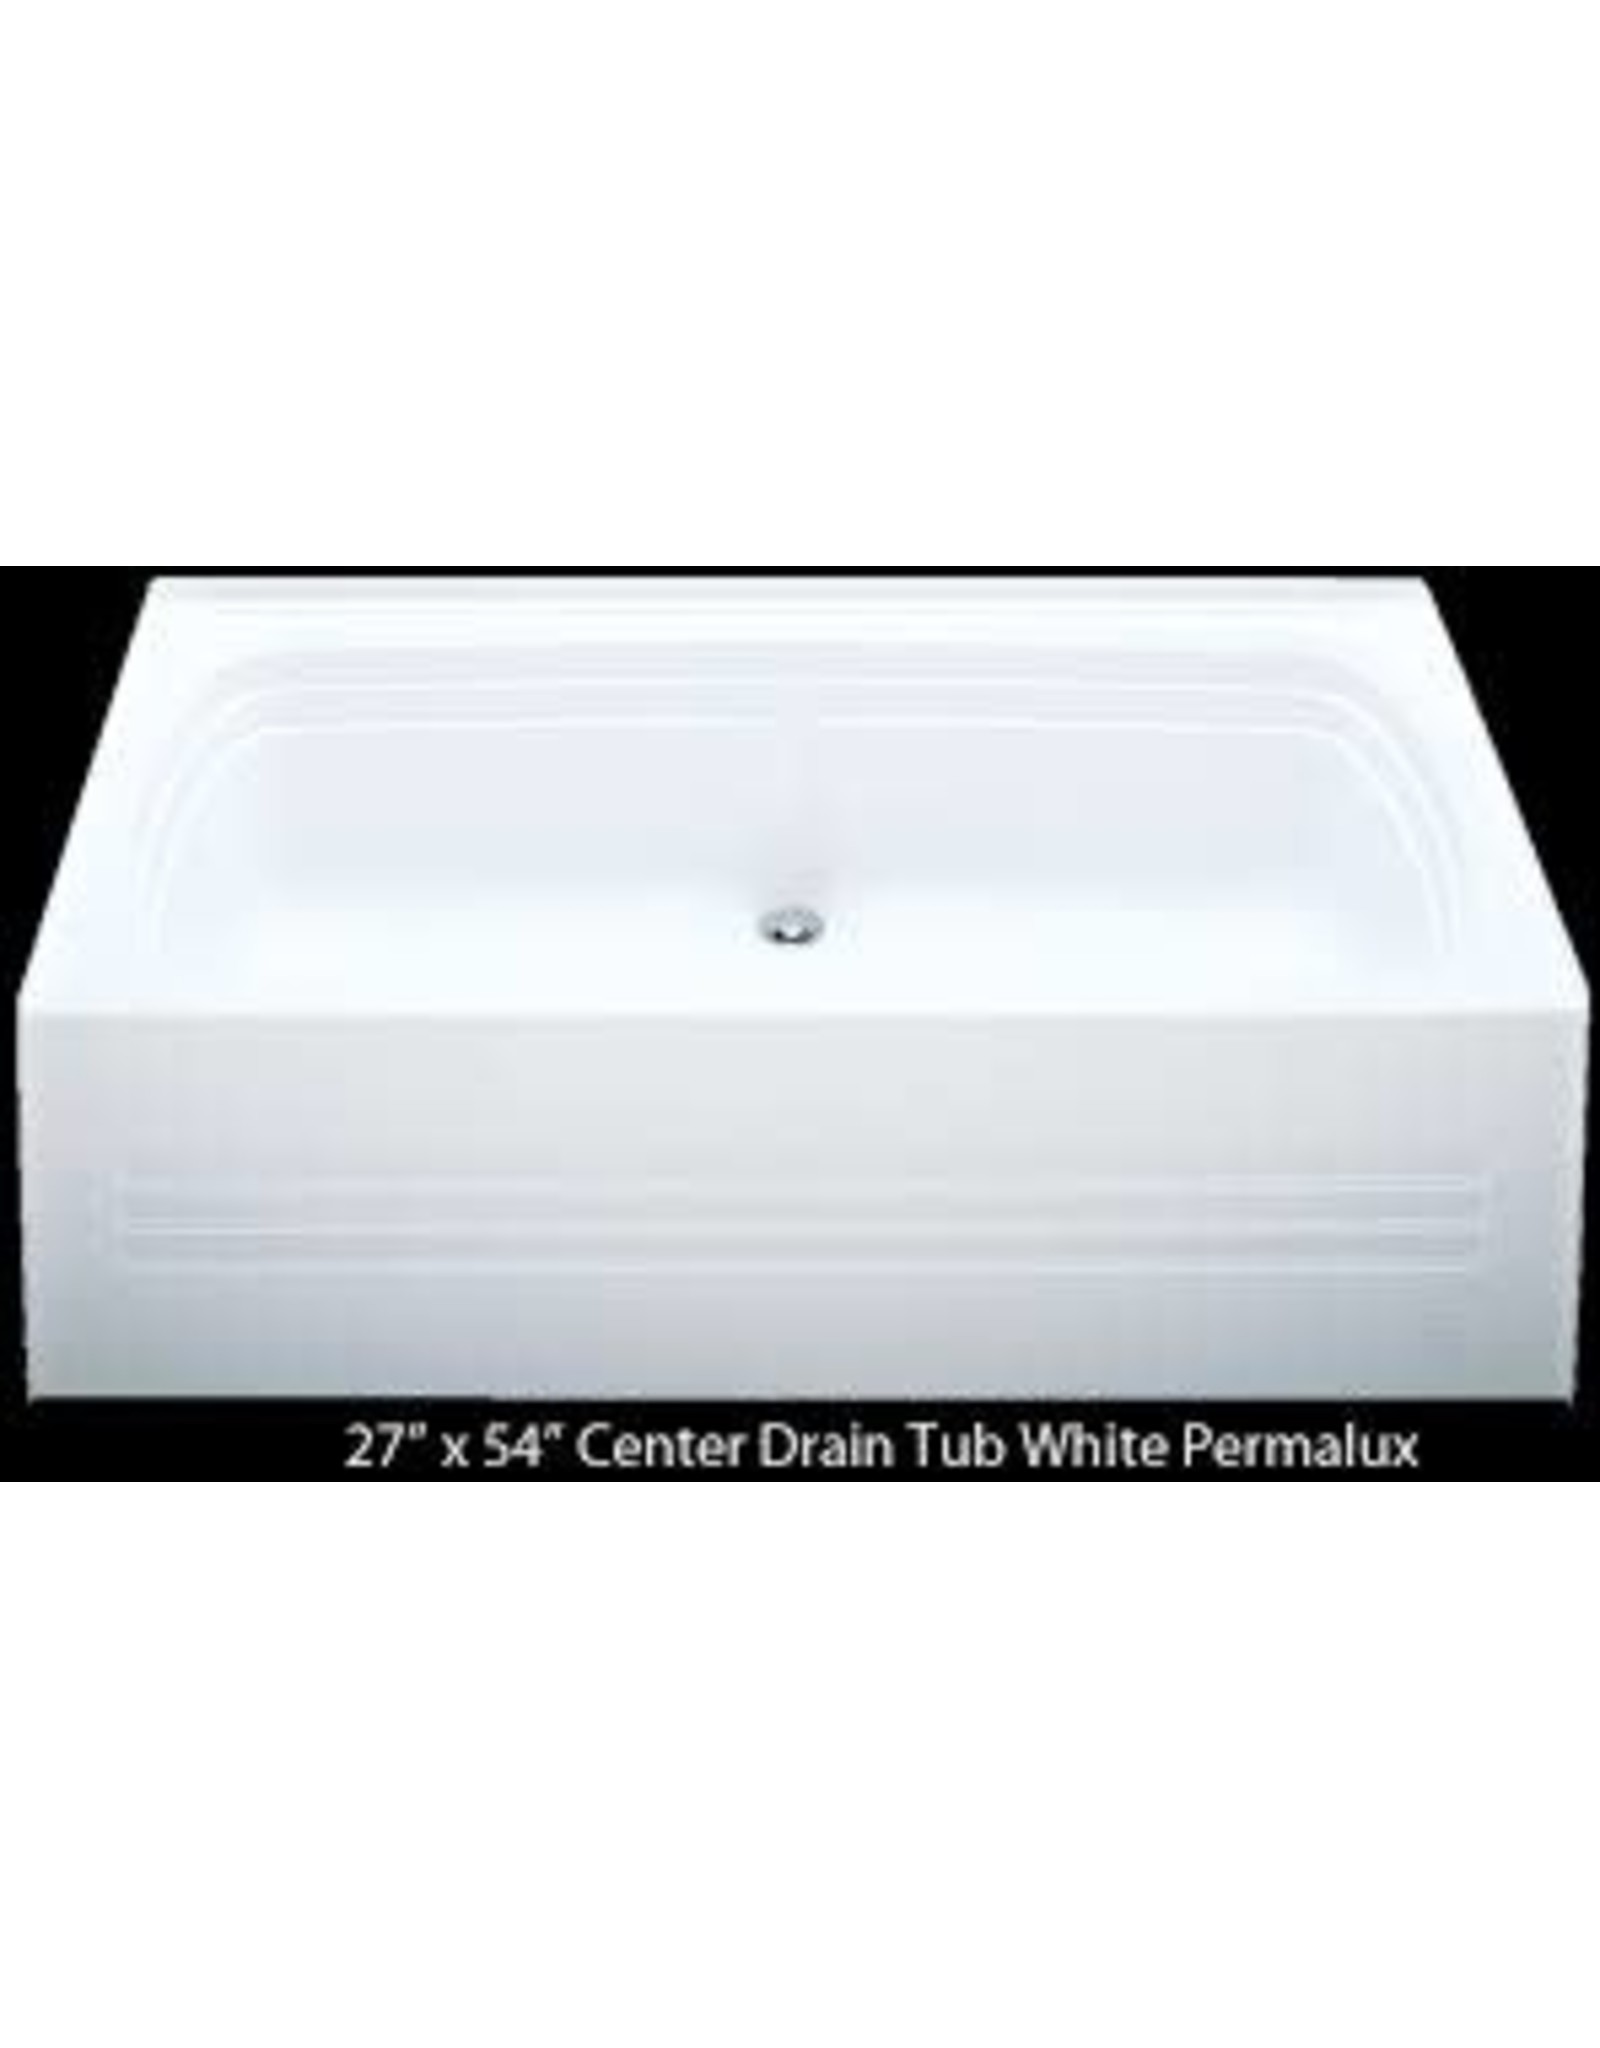 27 x 54 Mobile Home Tub White Center Drain